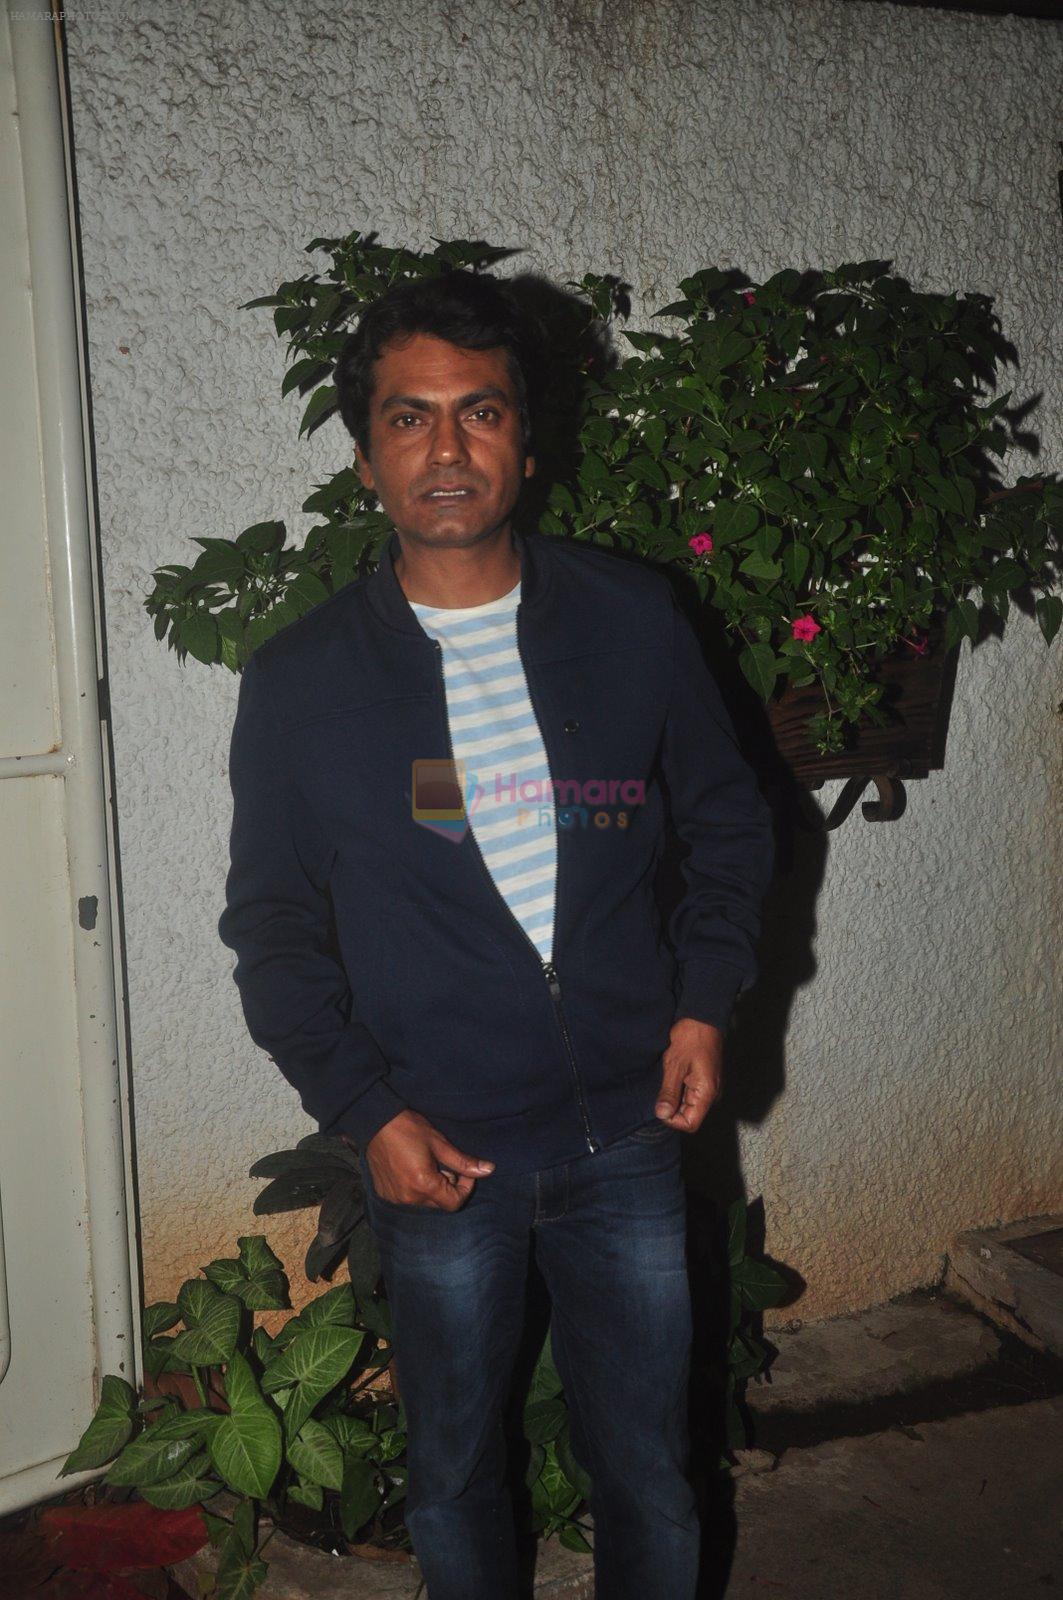 Nawazuddin Siddiqui at Badlapur Screening in Sunny Super Sound on 18th Feb 2015